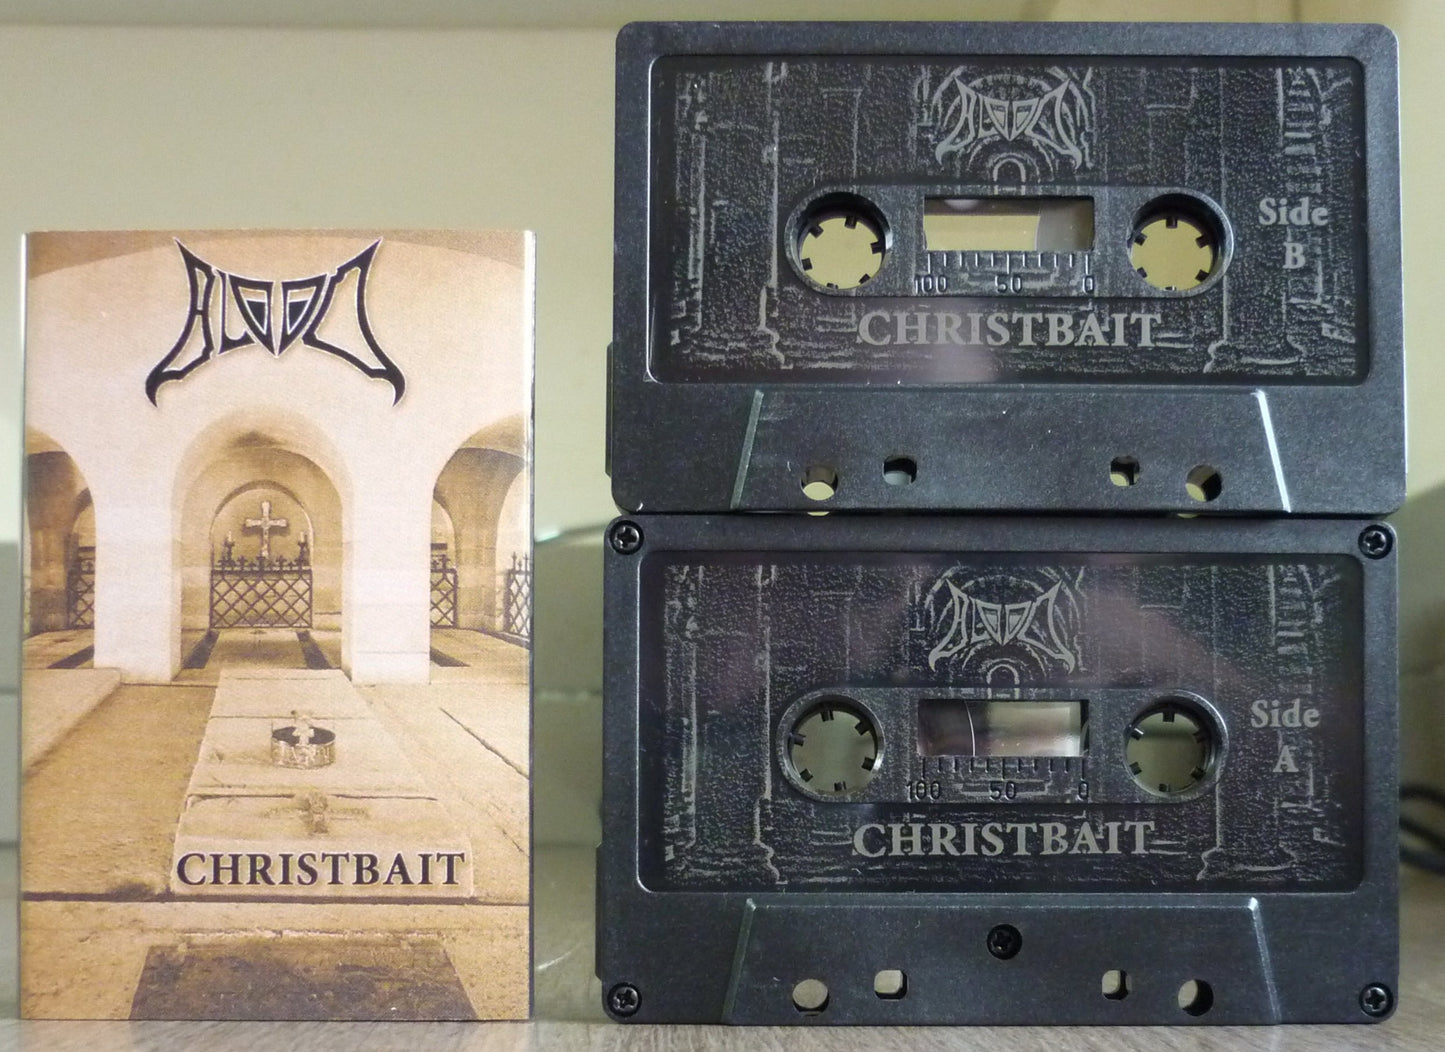 BLOOD "Christbait" Tape